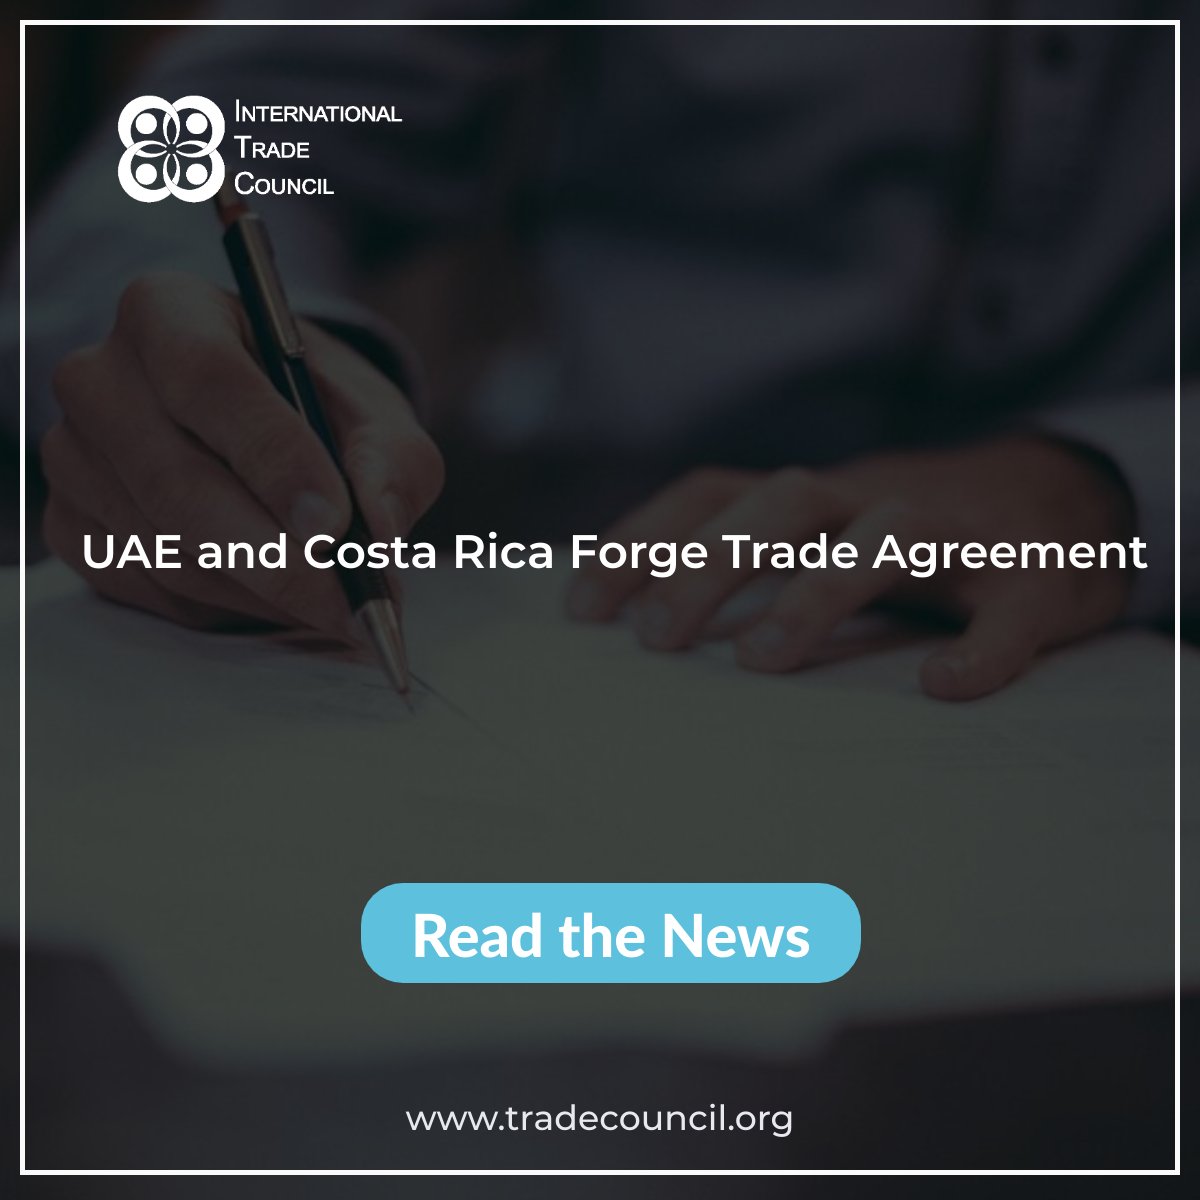 UAE and Costa Rica Forge Trade Agreement
Read The News: tradecouncil.org/uae-and-costa-…
#ITCNewsUpdates #BreakingNews #UAE #CostaRica #TradeAgreement #EconomicPartnership #InternationalTradeCouncil